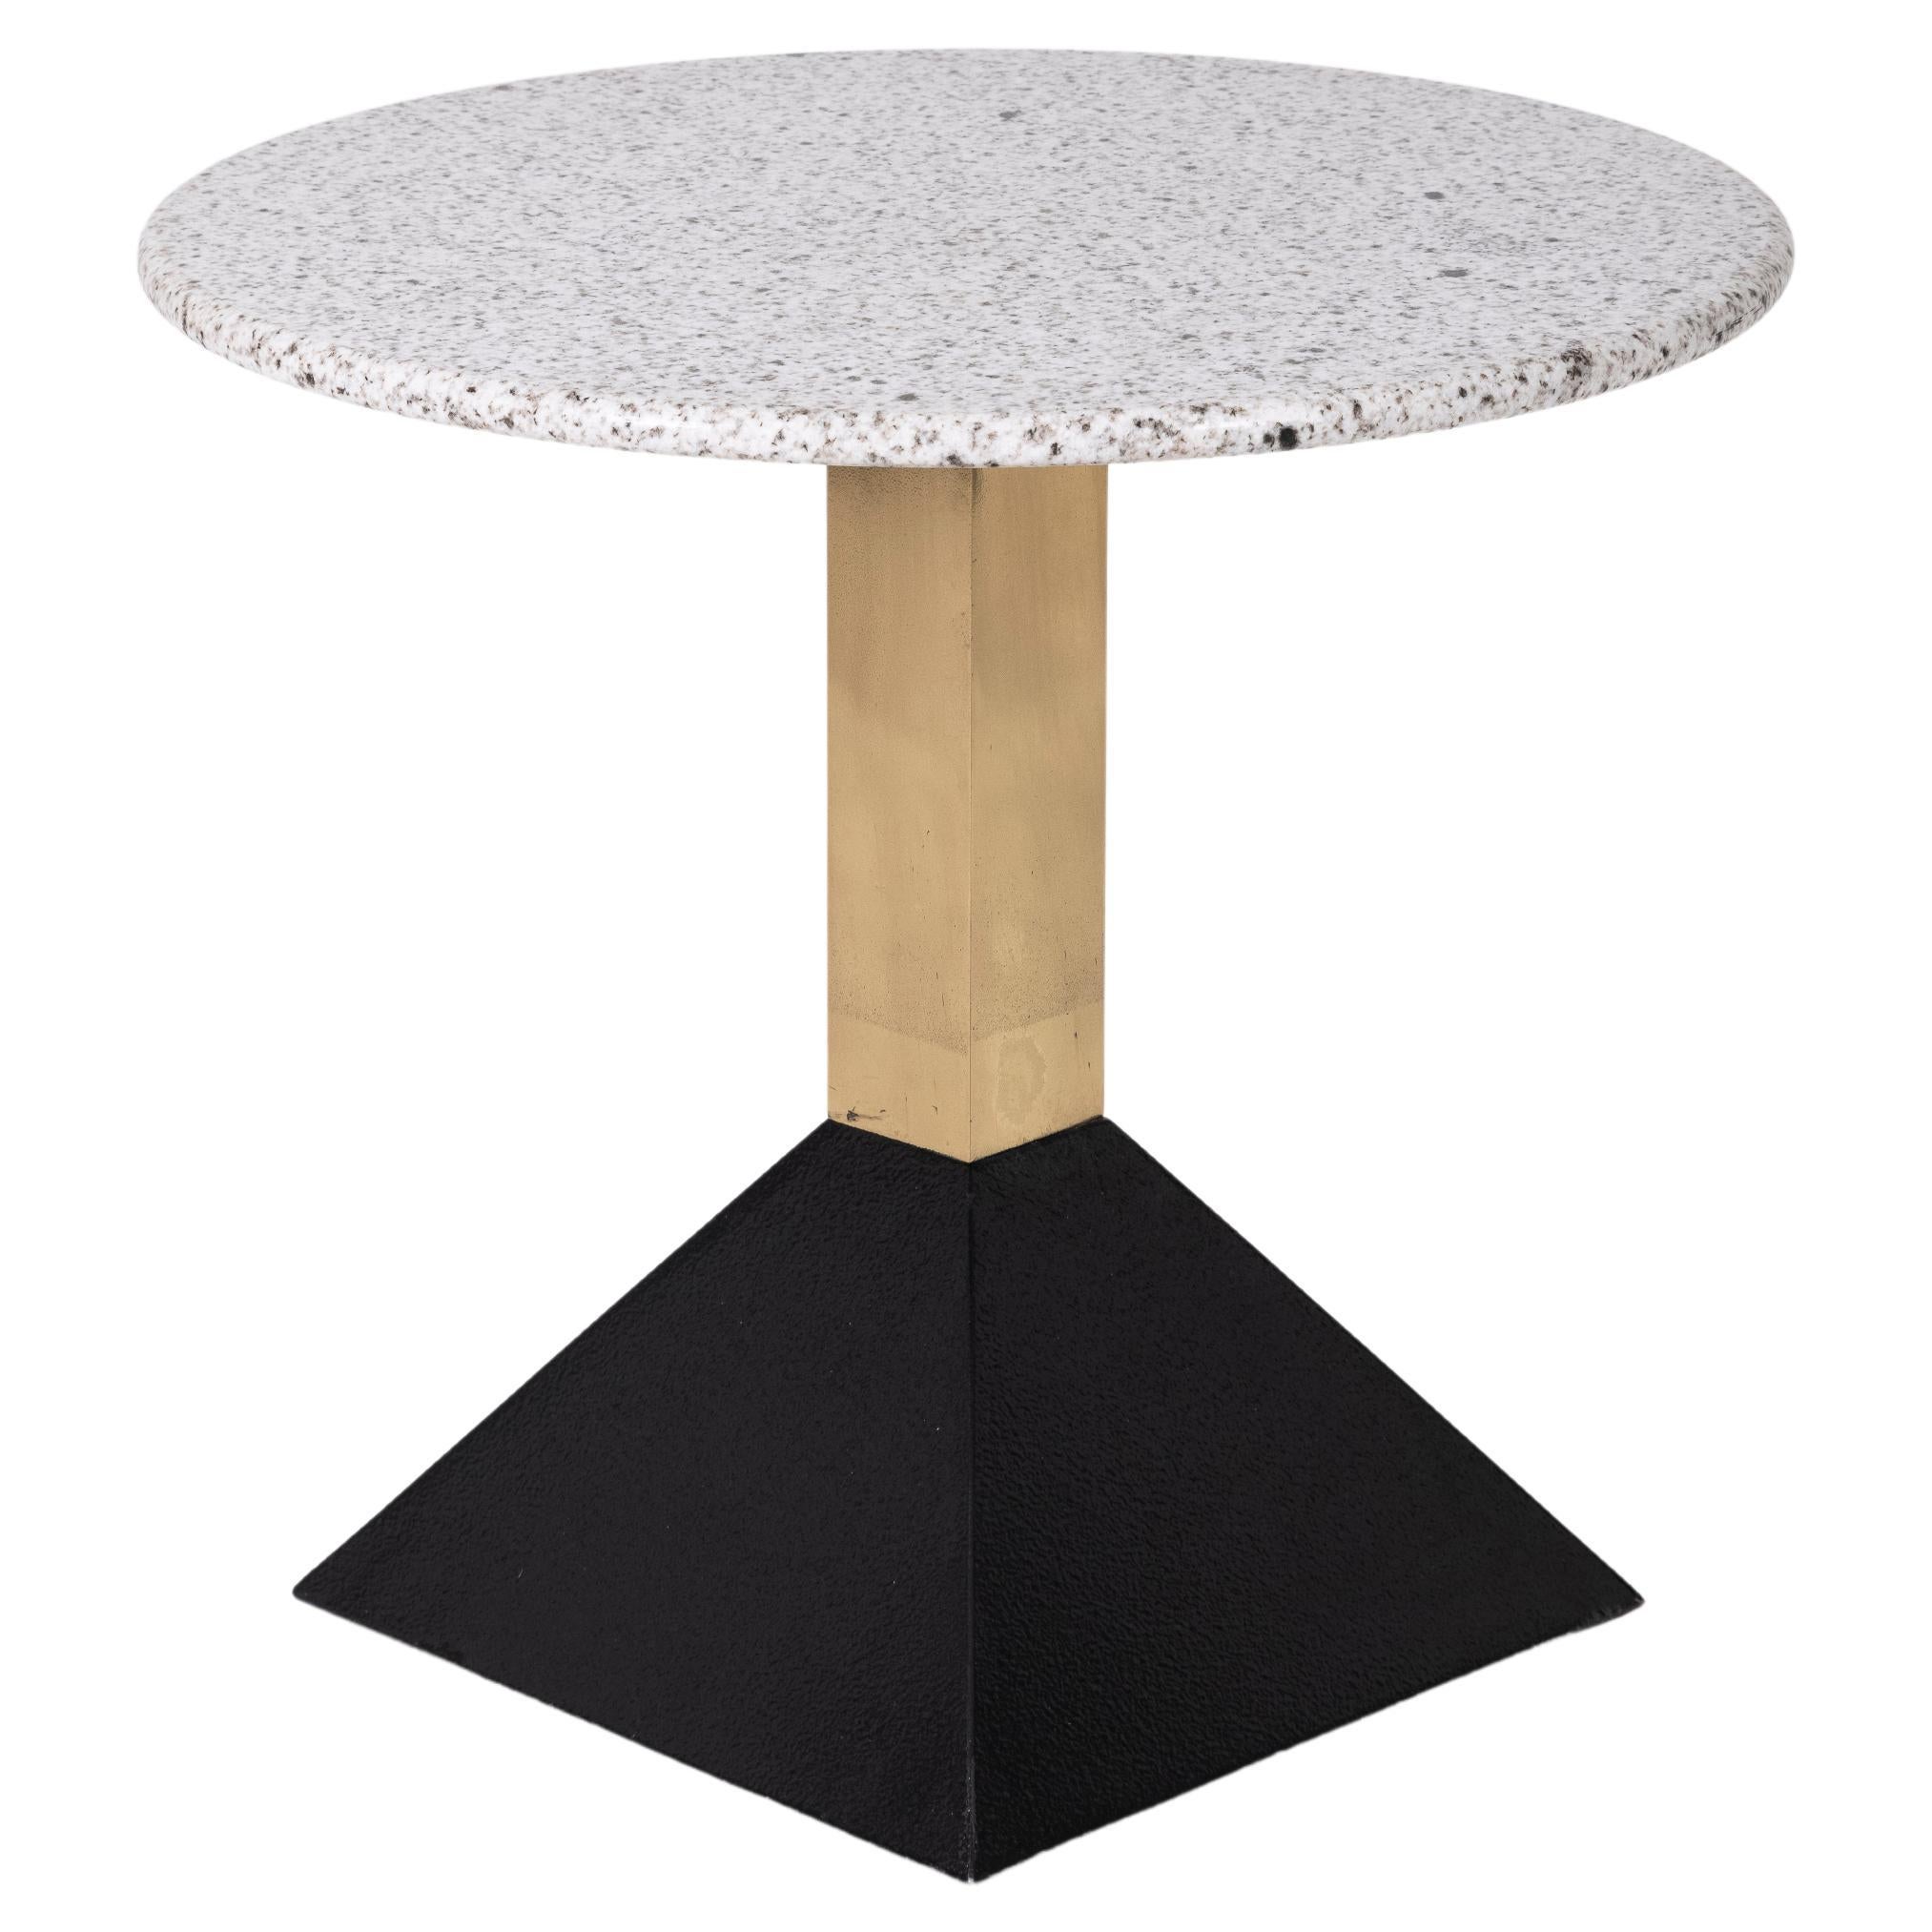 Side table or pedestal table in Memphis granite